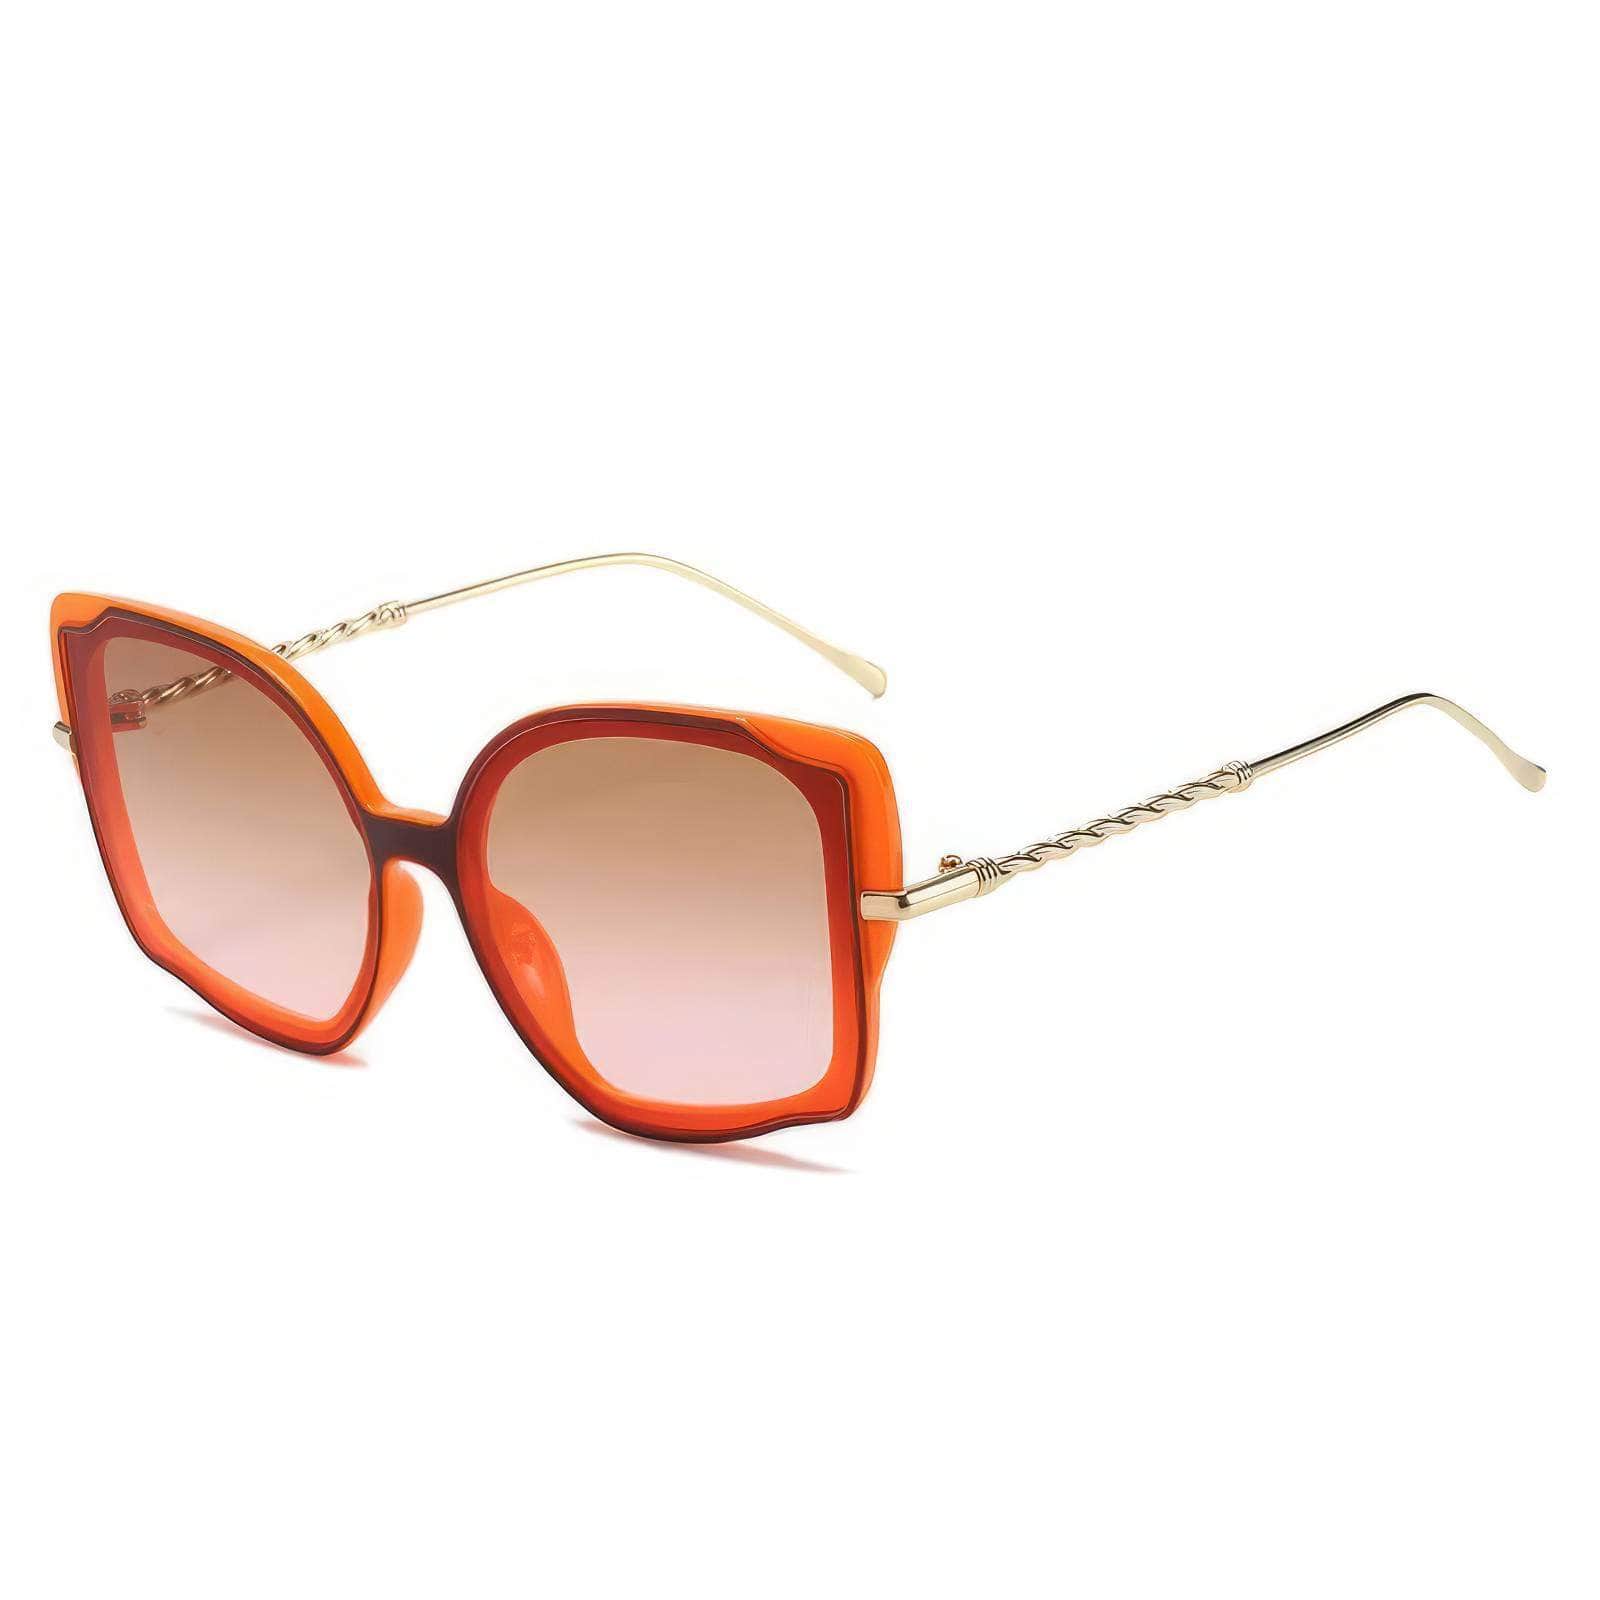 Gold Oversized Square Sunglasses Orange / Resin